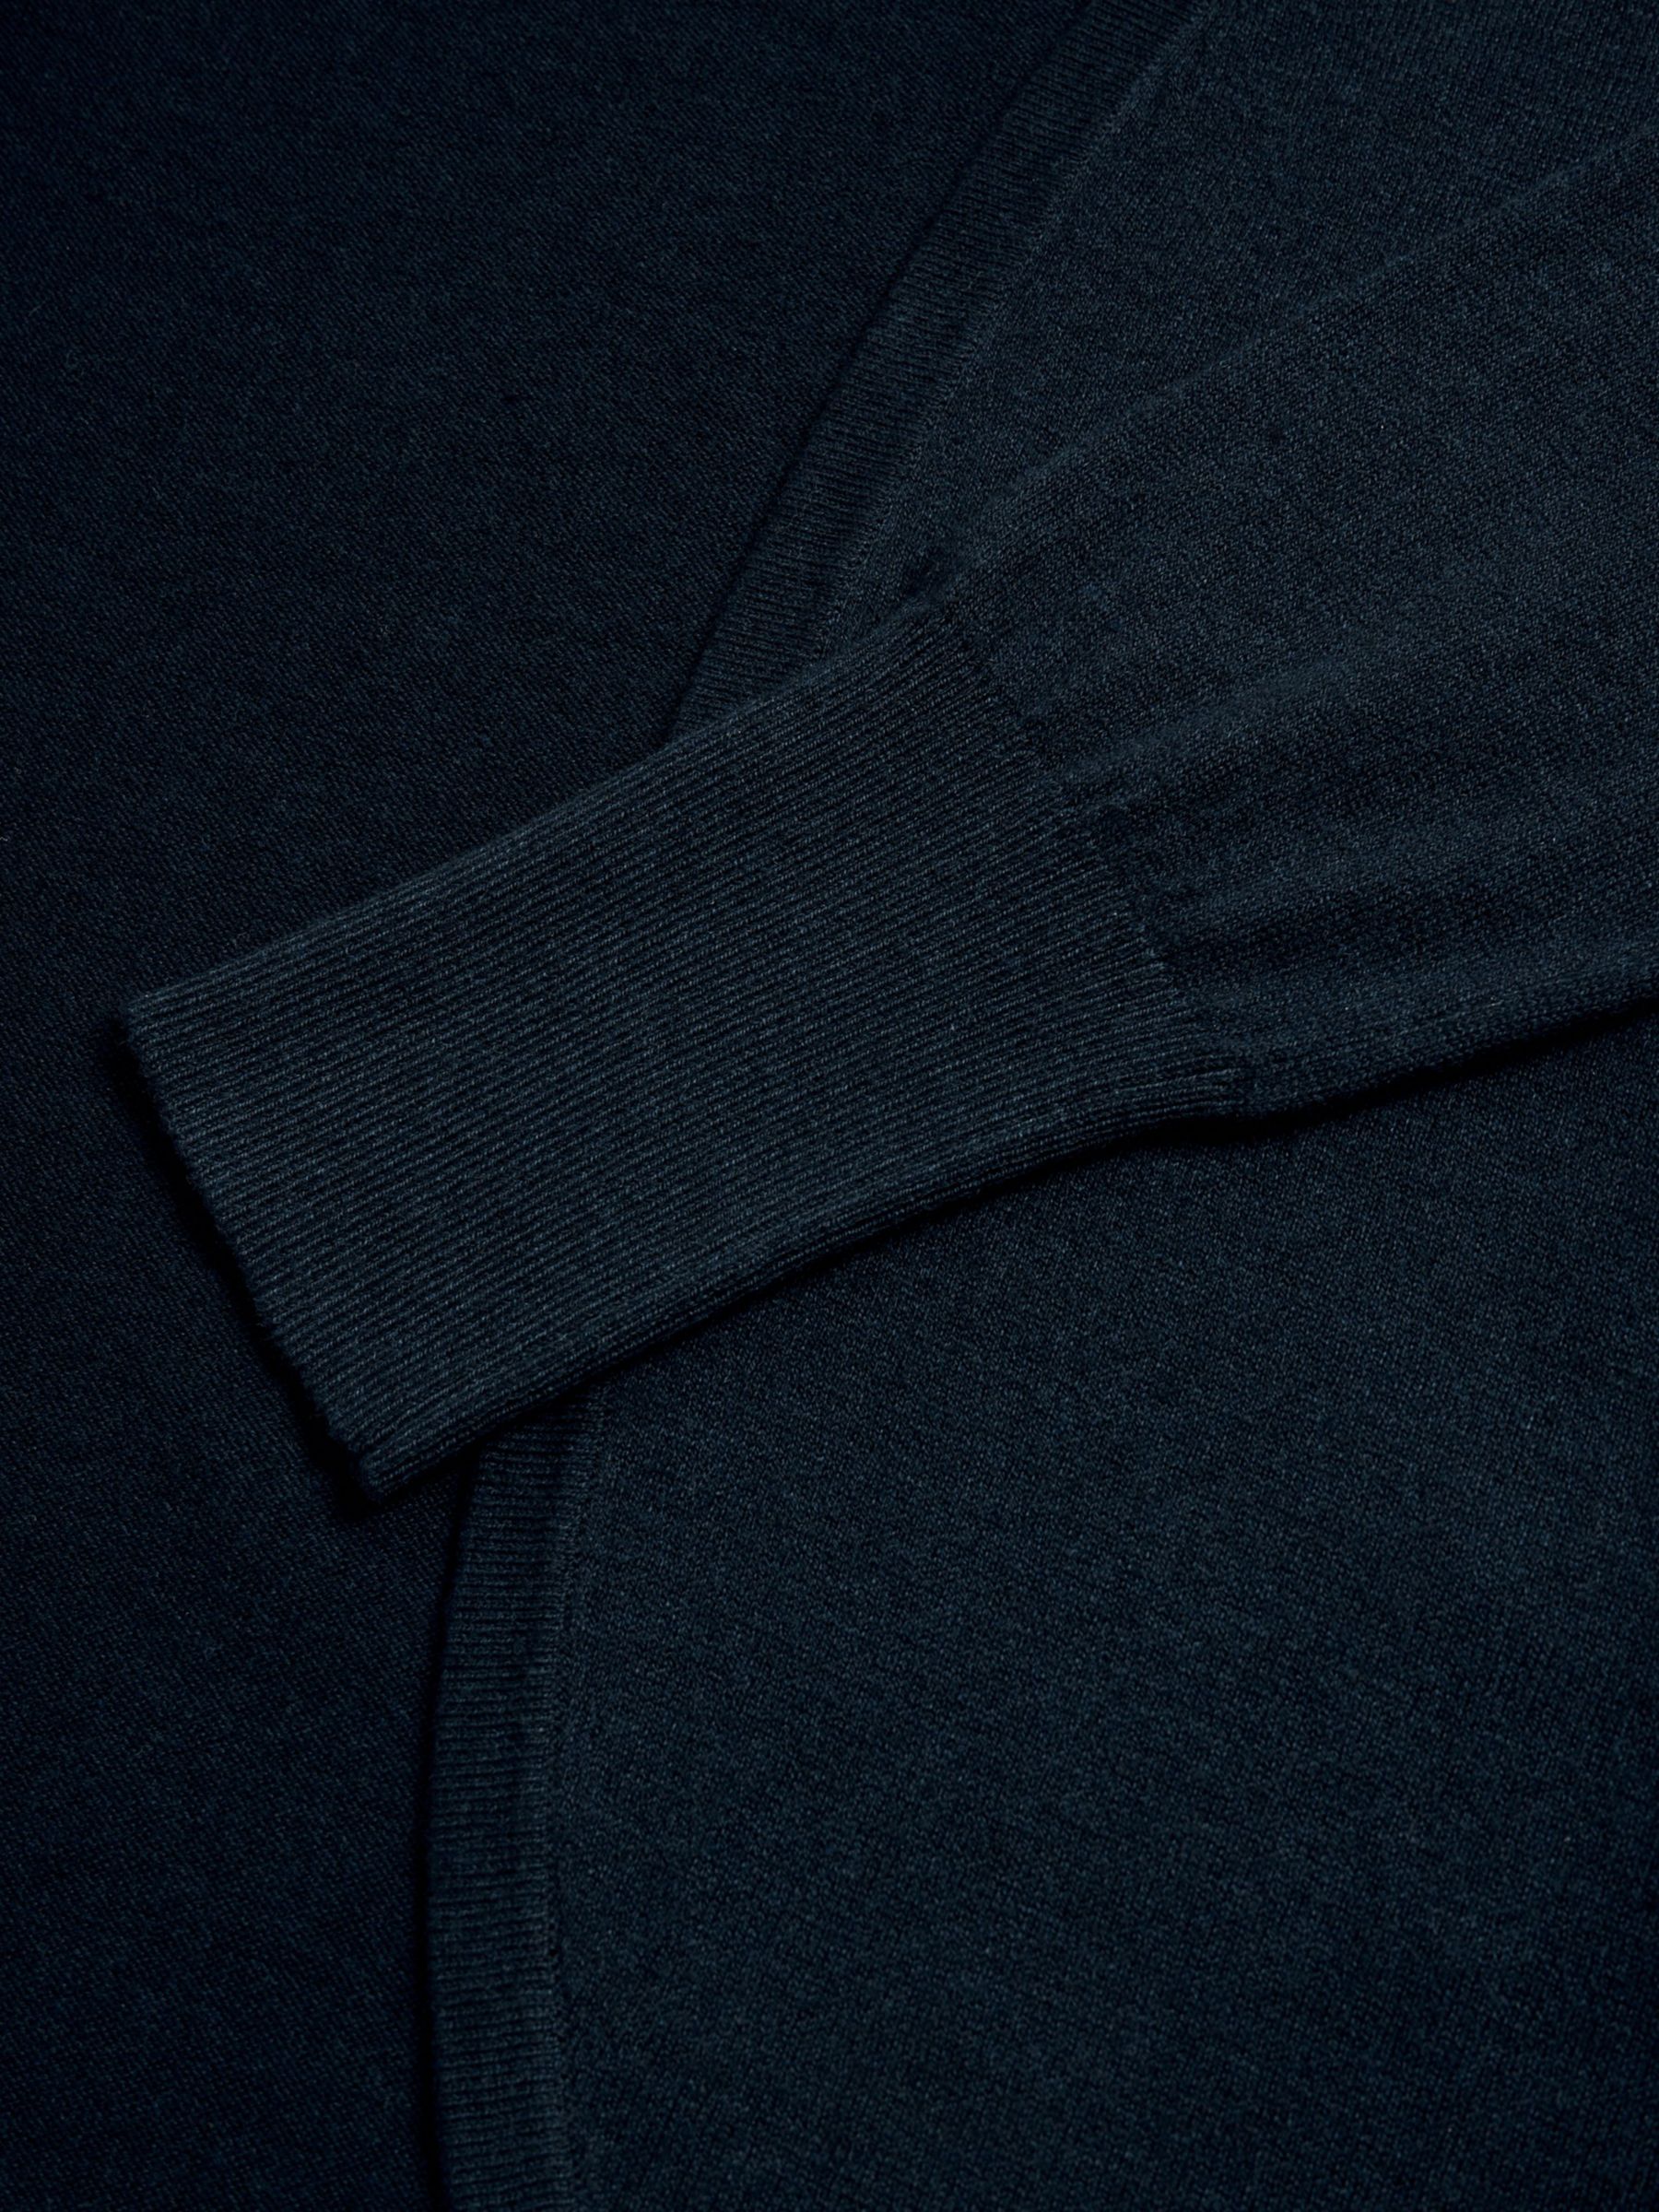 White Stuff Leah Fine Knit Curved Hem Cardigan, Dark Navy, XL